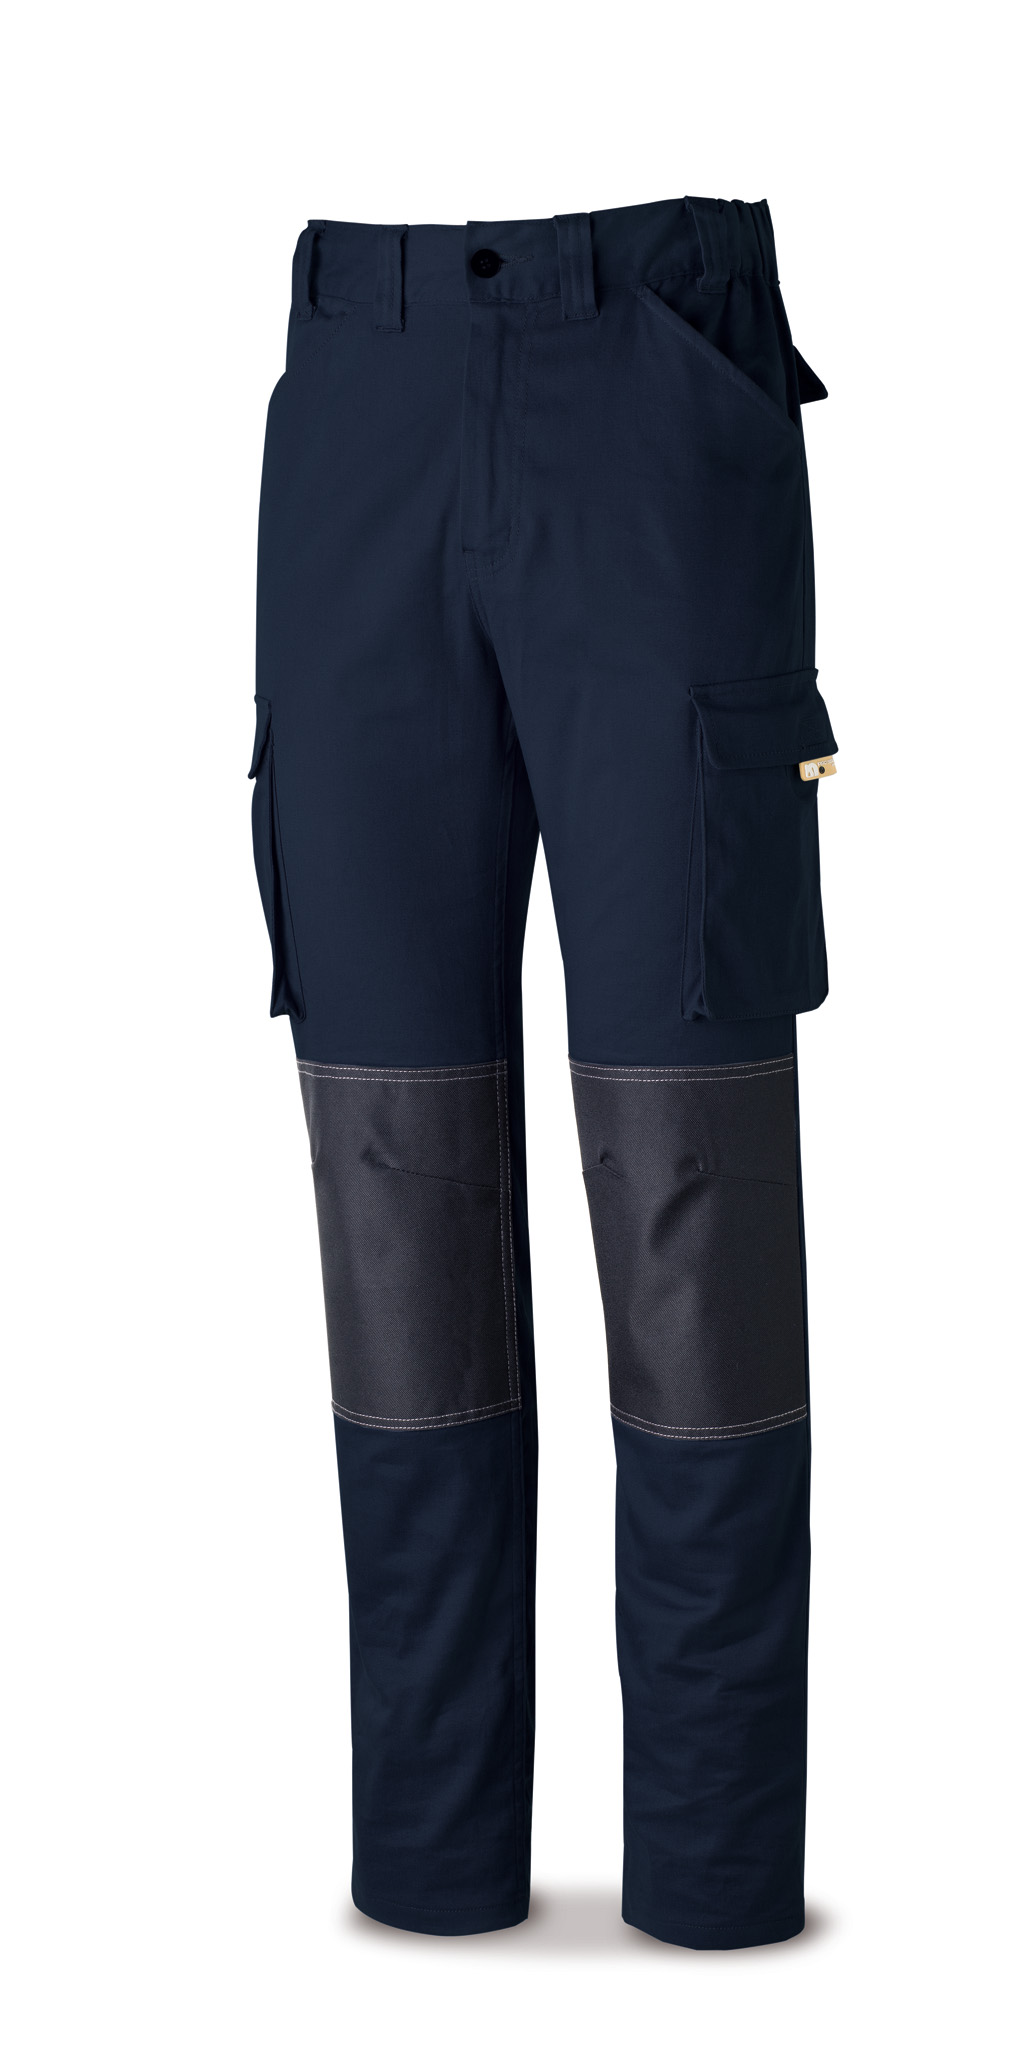 288-PNA Workwear Pro Series Parka PRO SERIES. Navy blue/black.